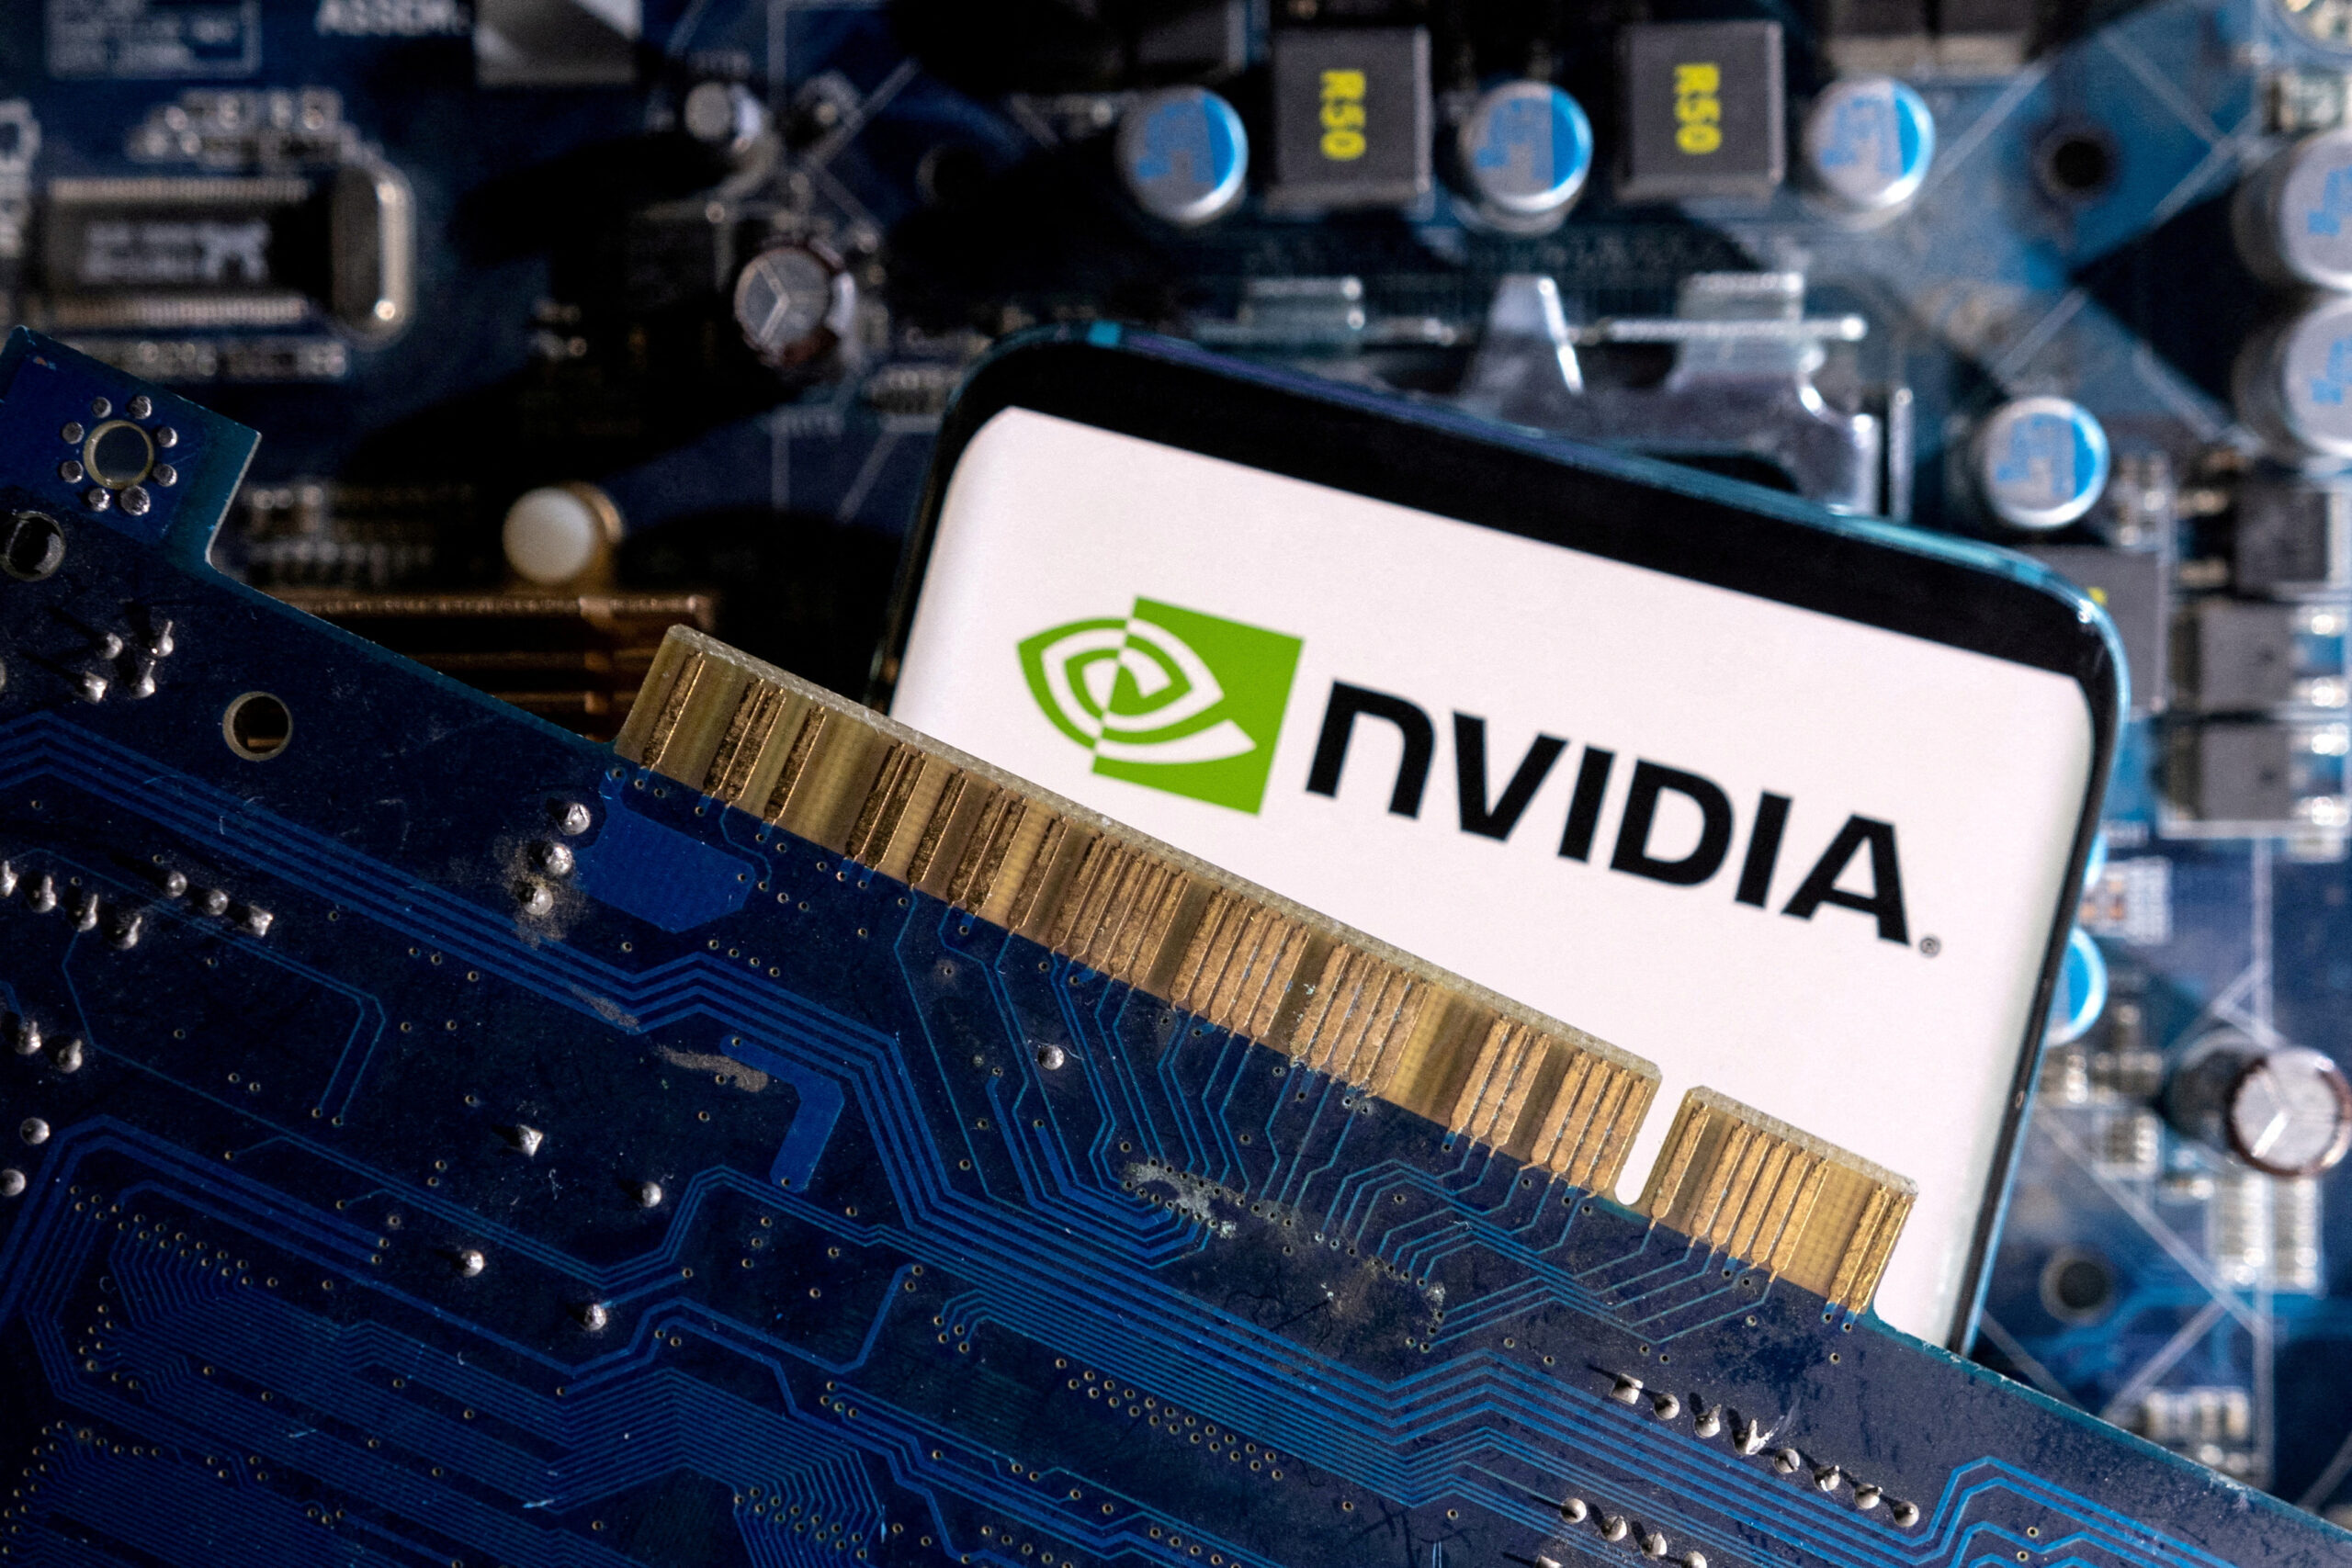 Nvidia's market dominance highlights shifting tech landscape